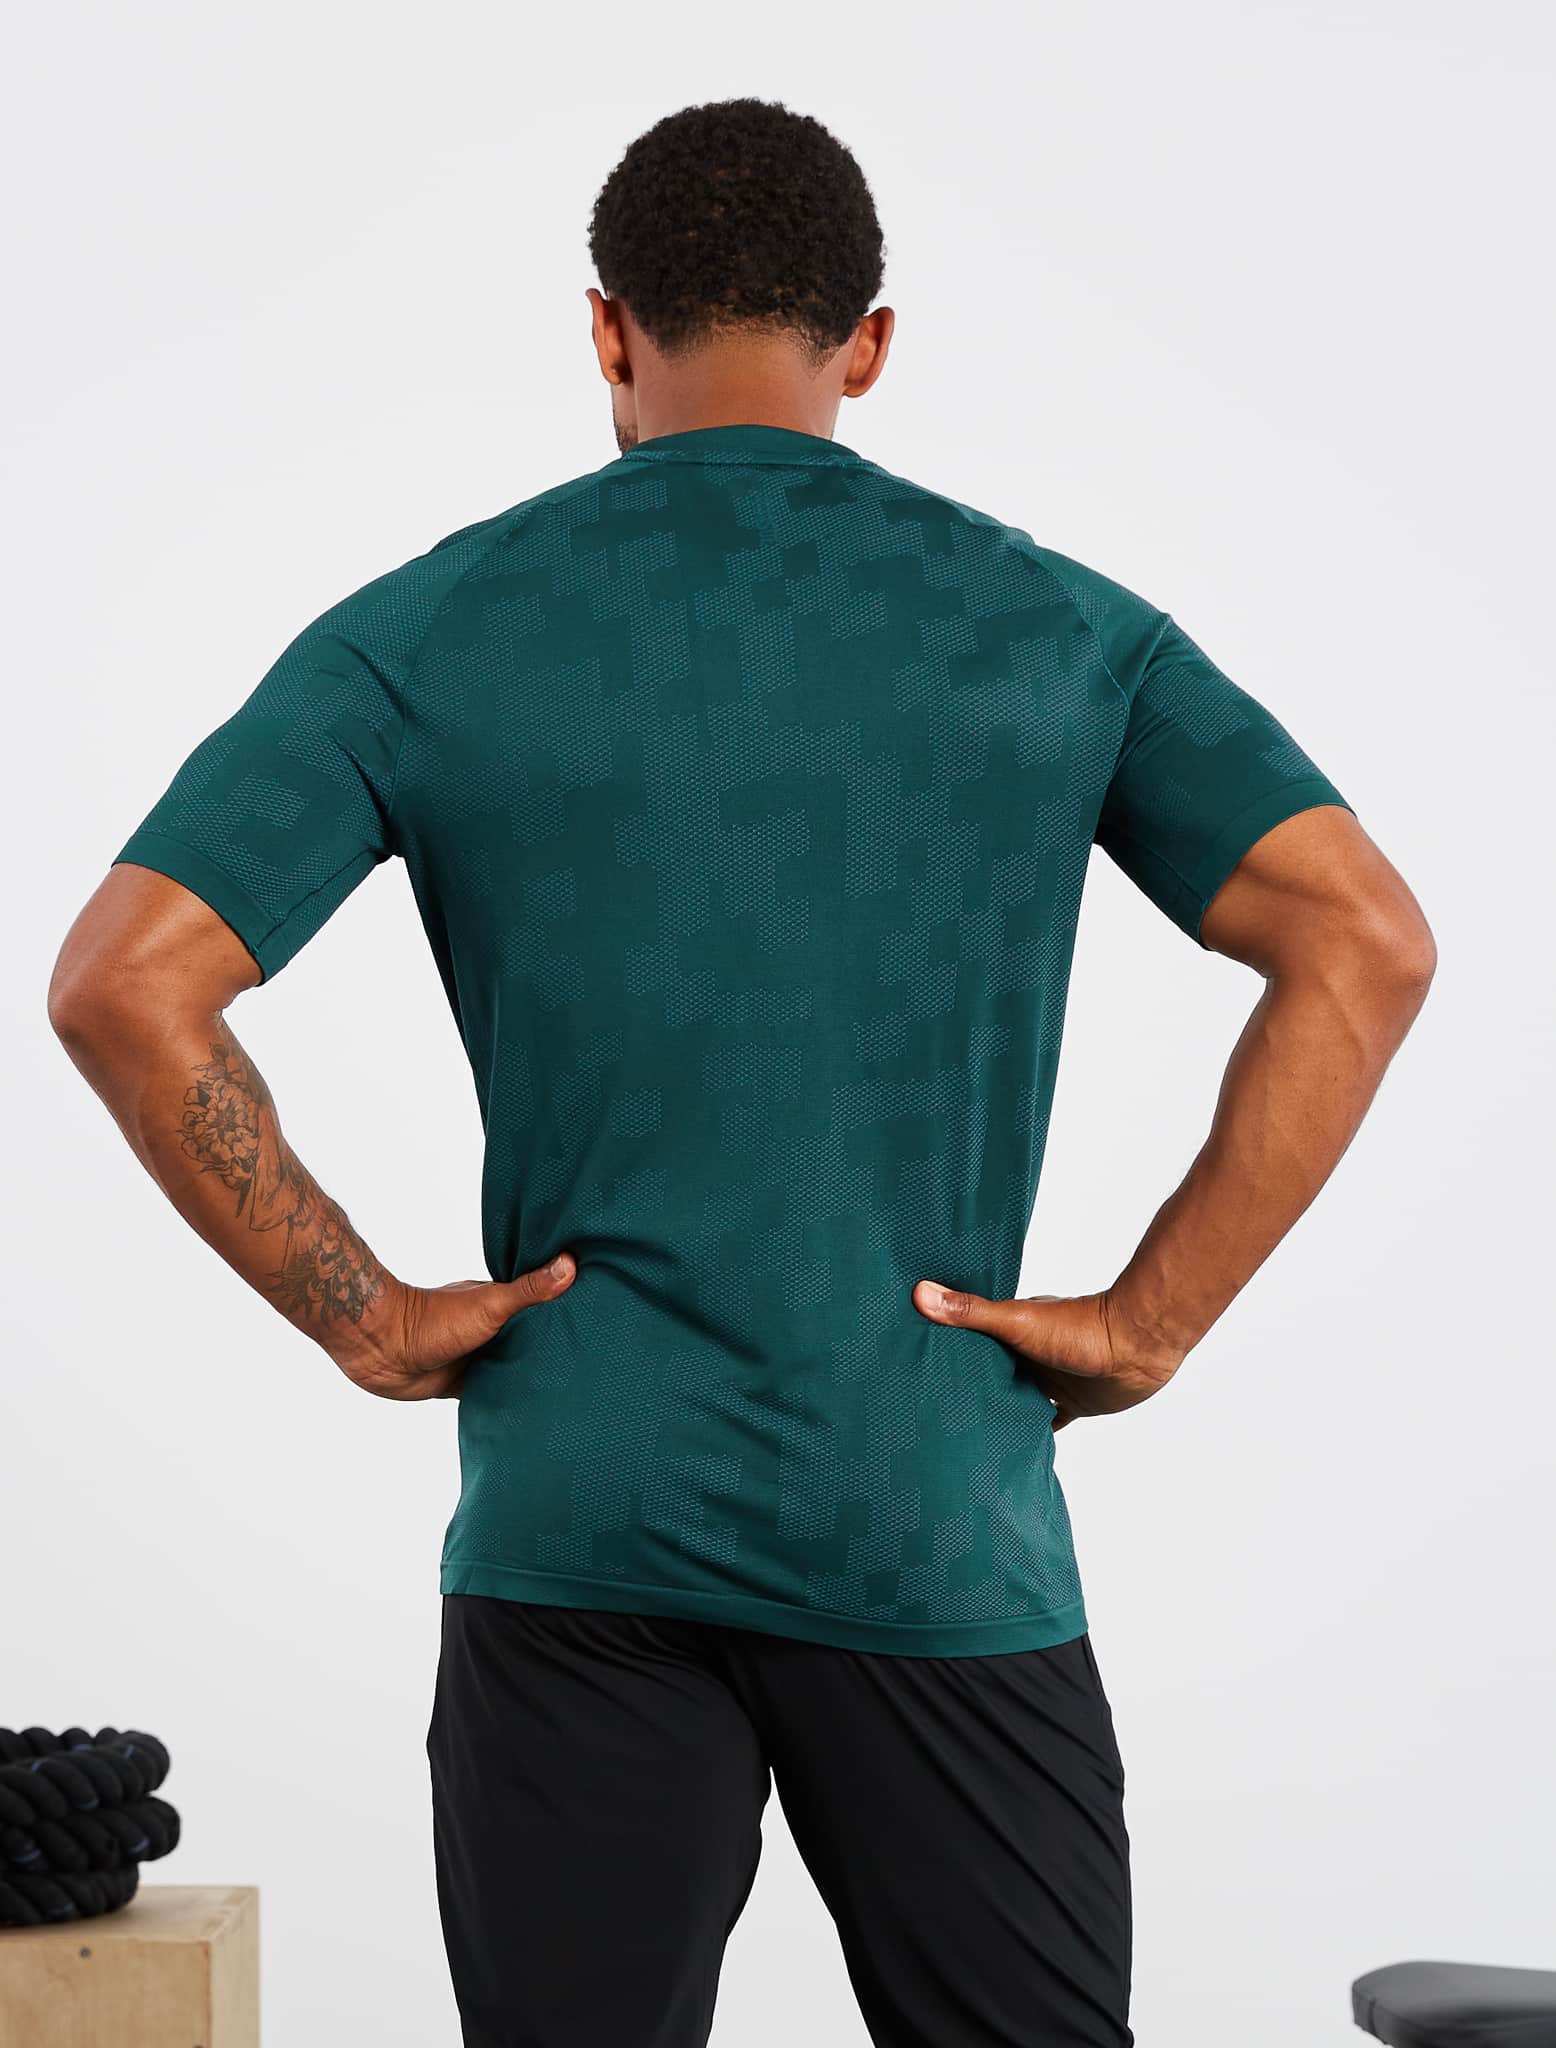 Camo Seamless T-Shirt / Dark Green Pursue Fitness 2